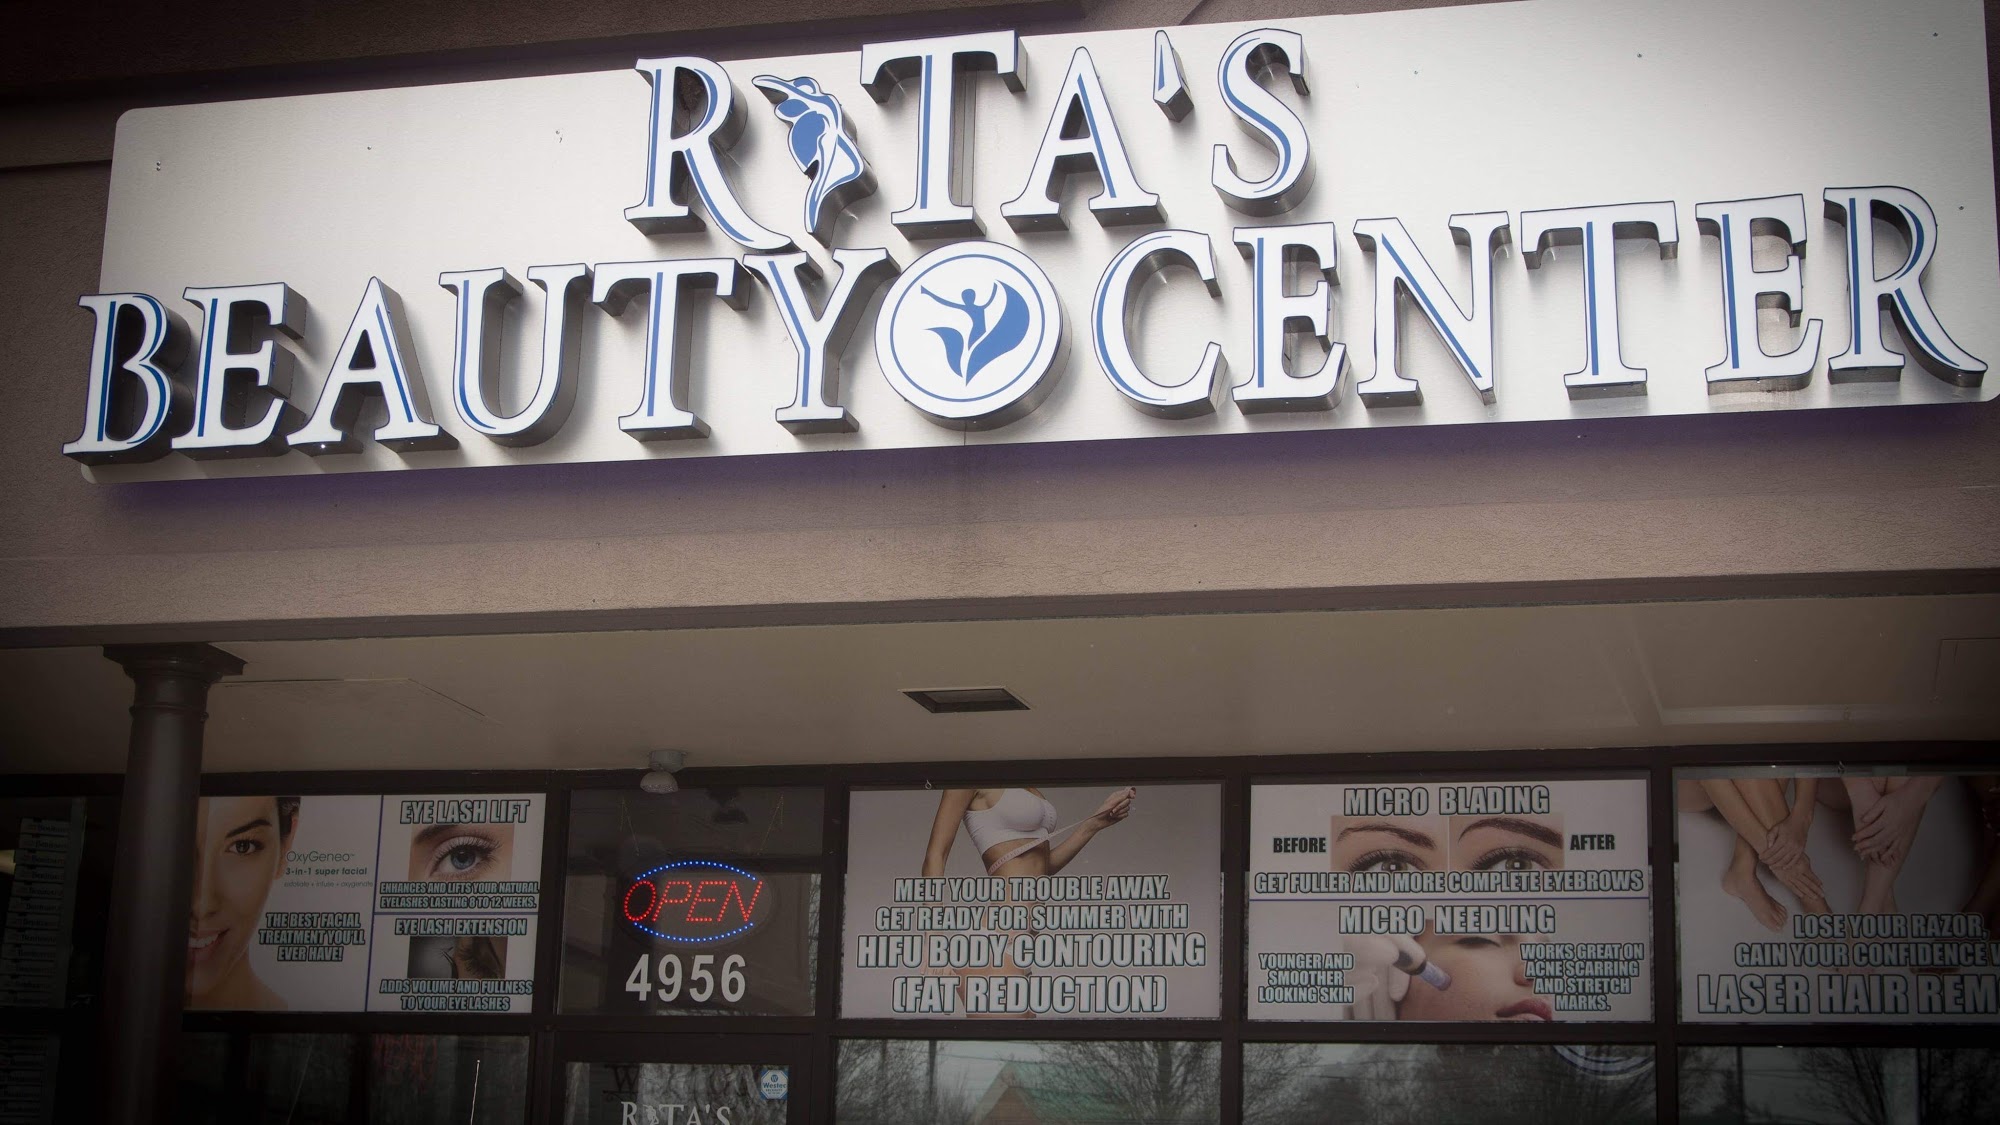 Rita's Beauty Center